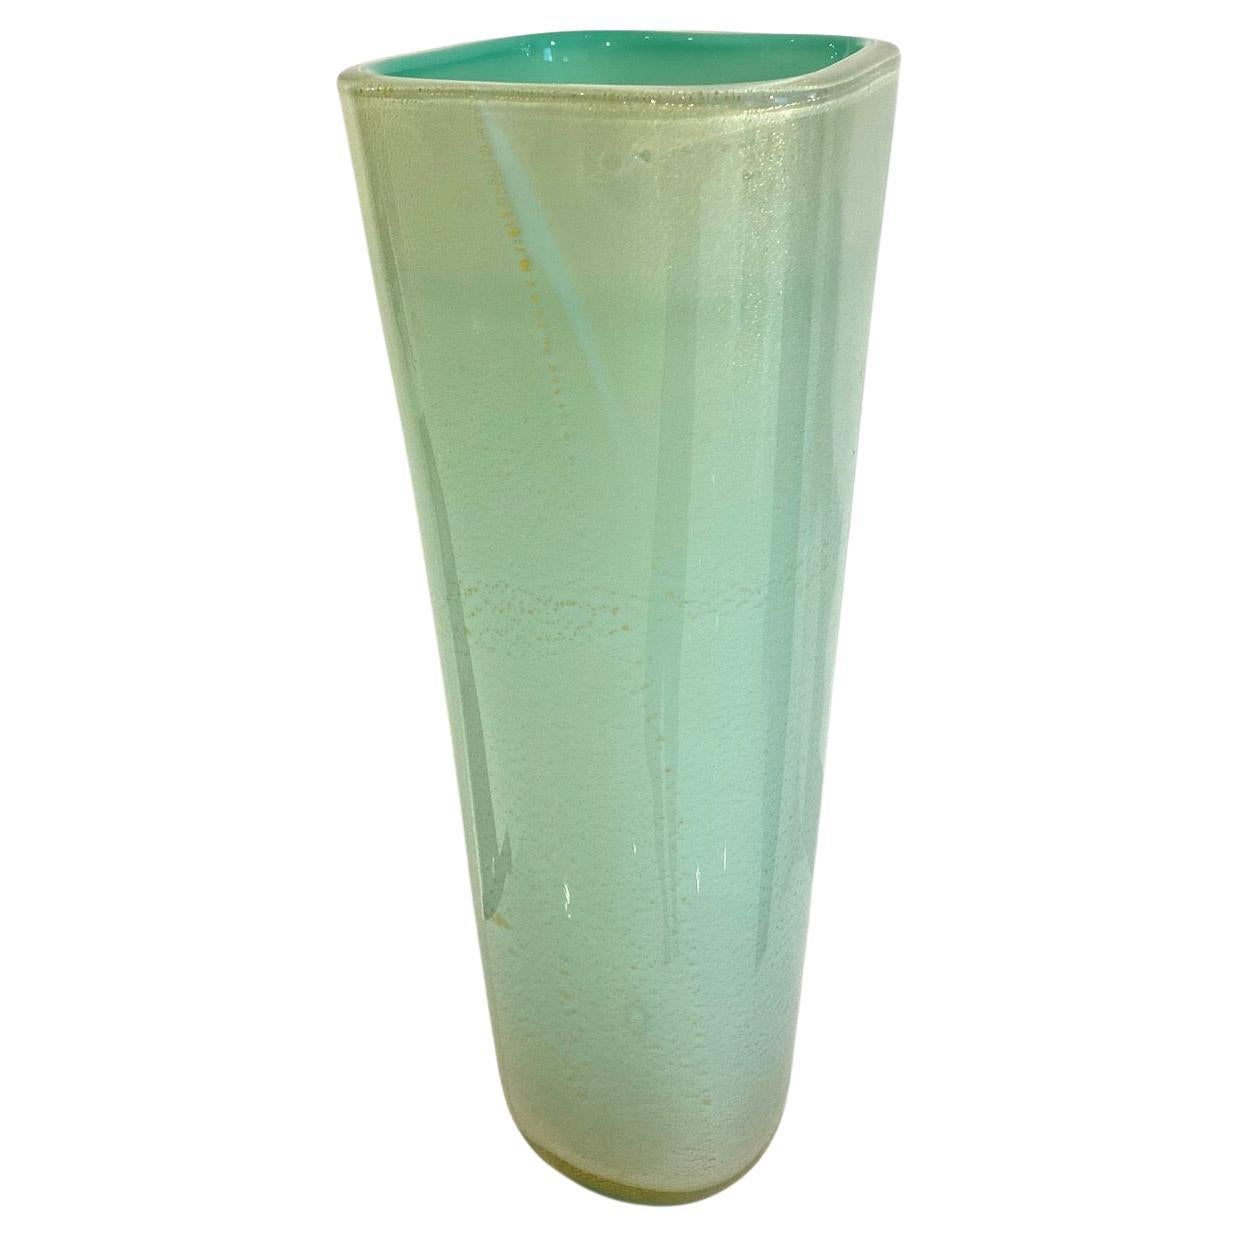 Murano Blown glass " Sea Foam" Vase with Gilt Inclusions by Seguso